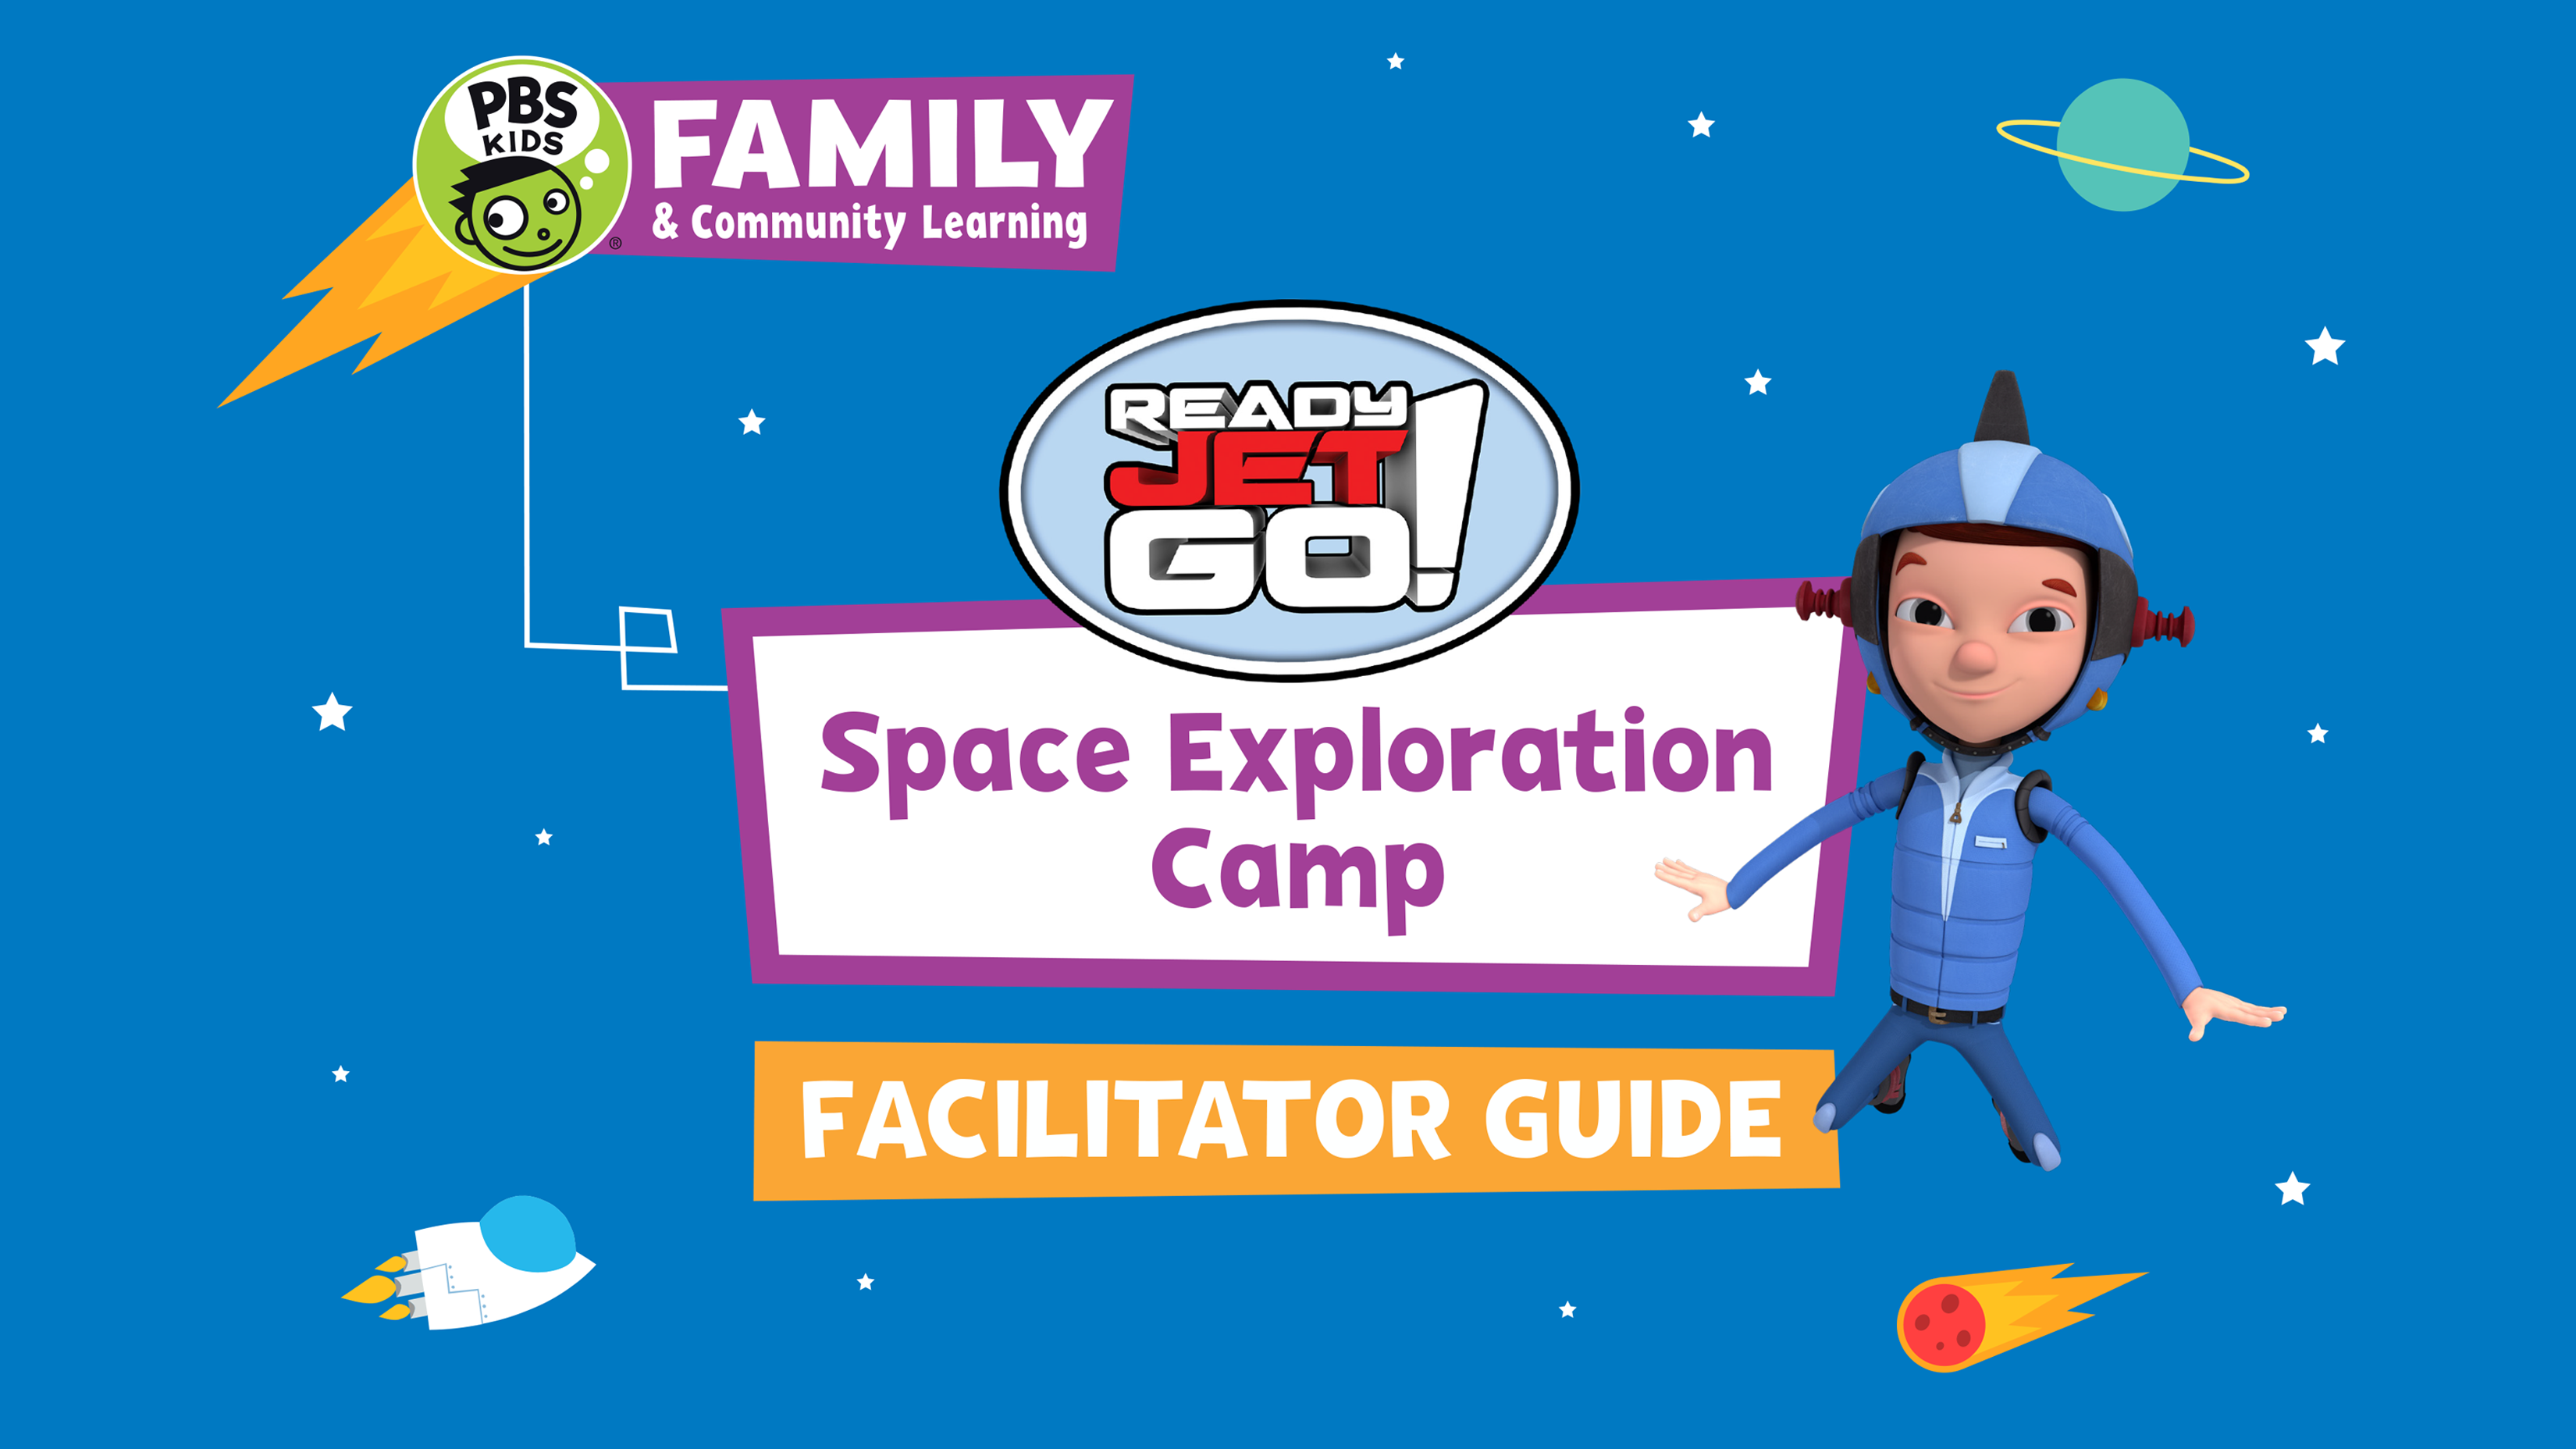 Space Exploration Camp Ready Jet Go! PBS LearningMedia